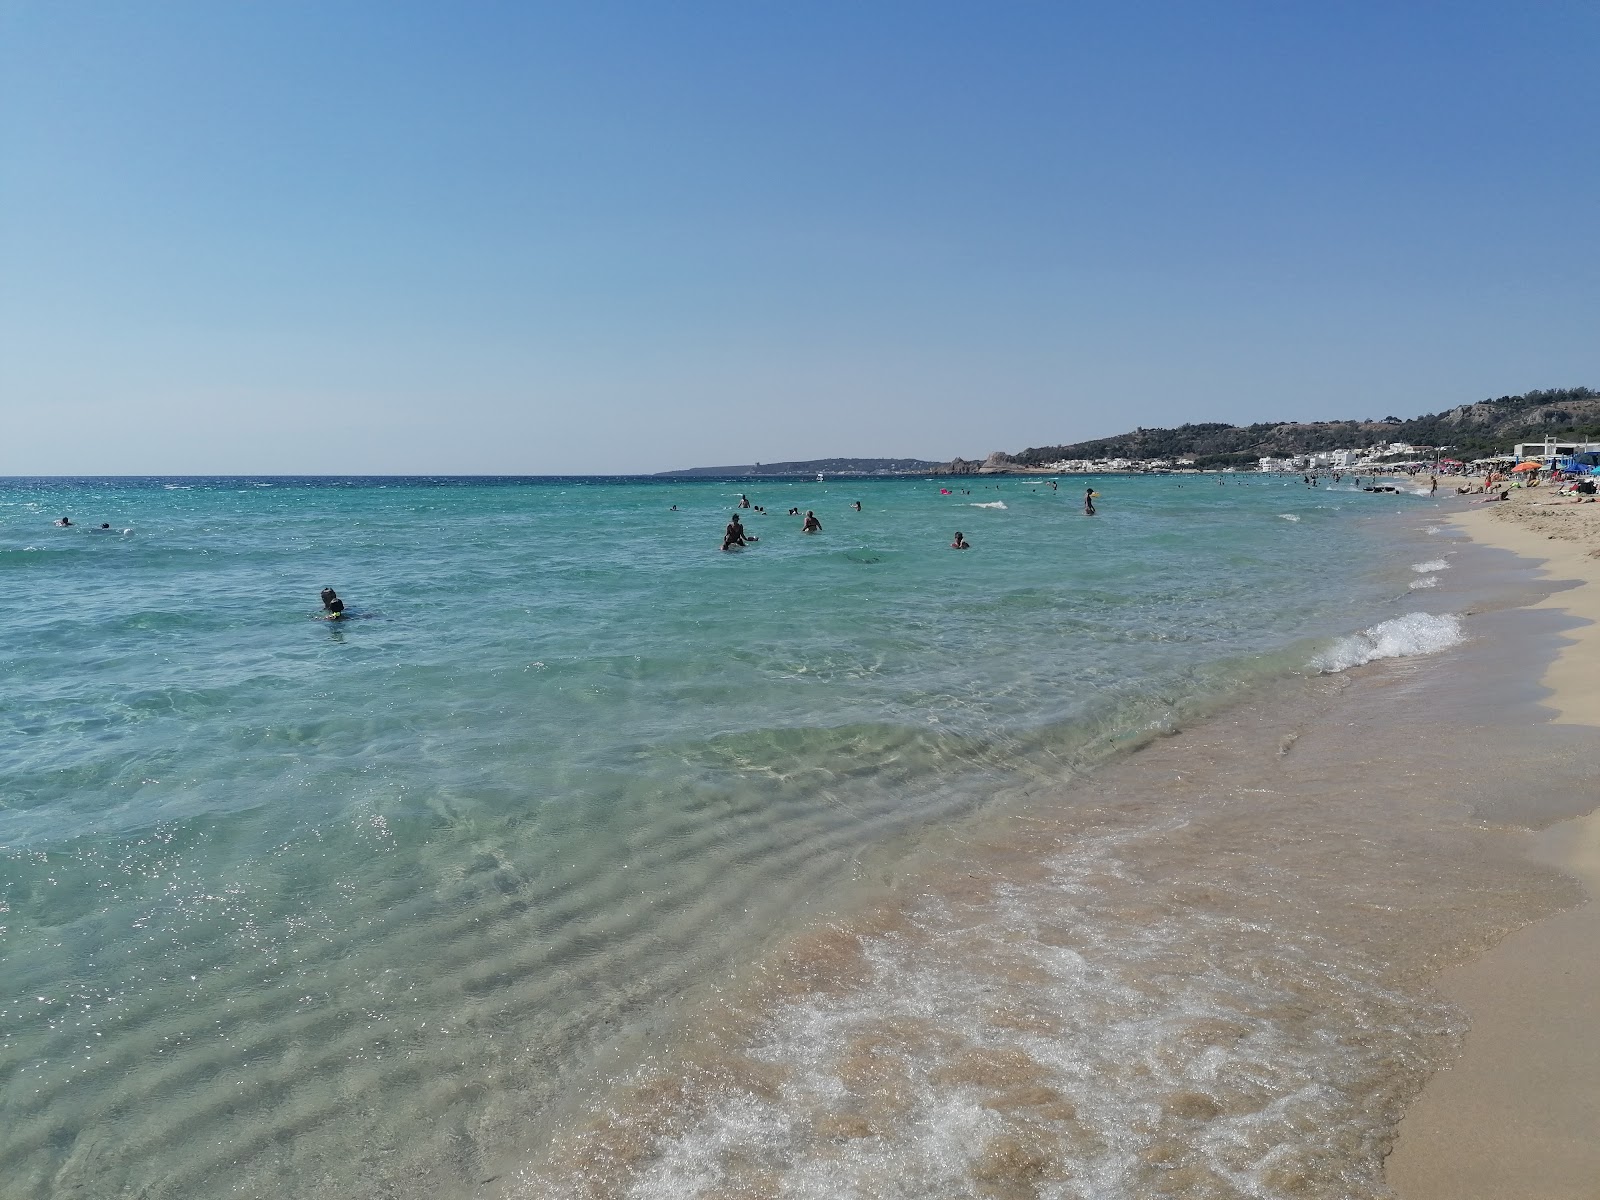 Foto de Spiaggia Padula Bianca ubicado en área natural